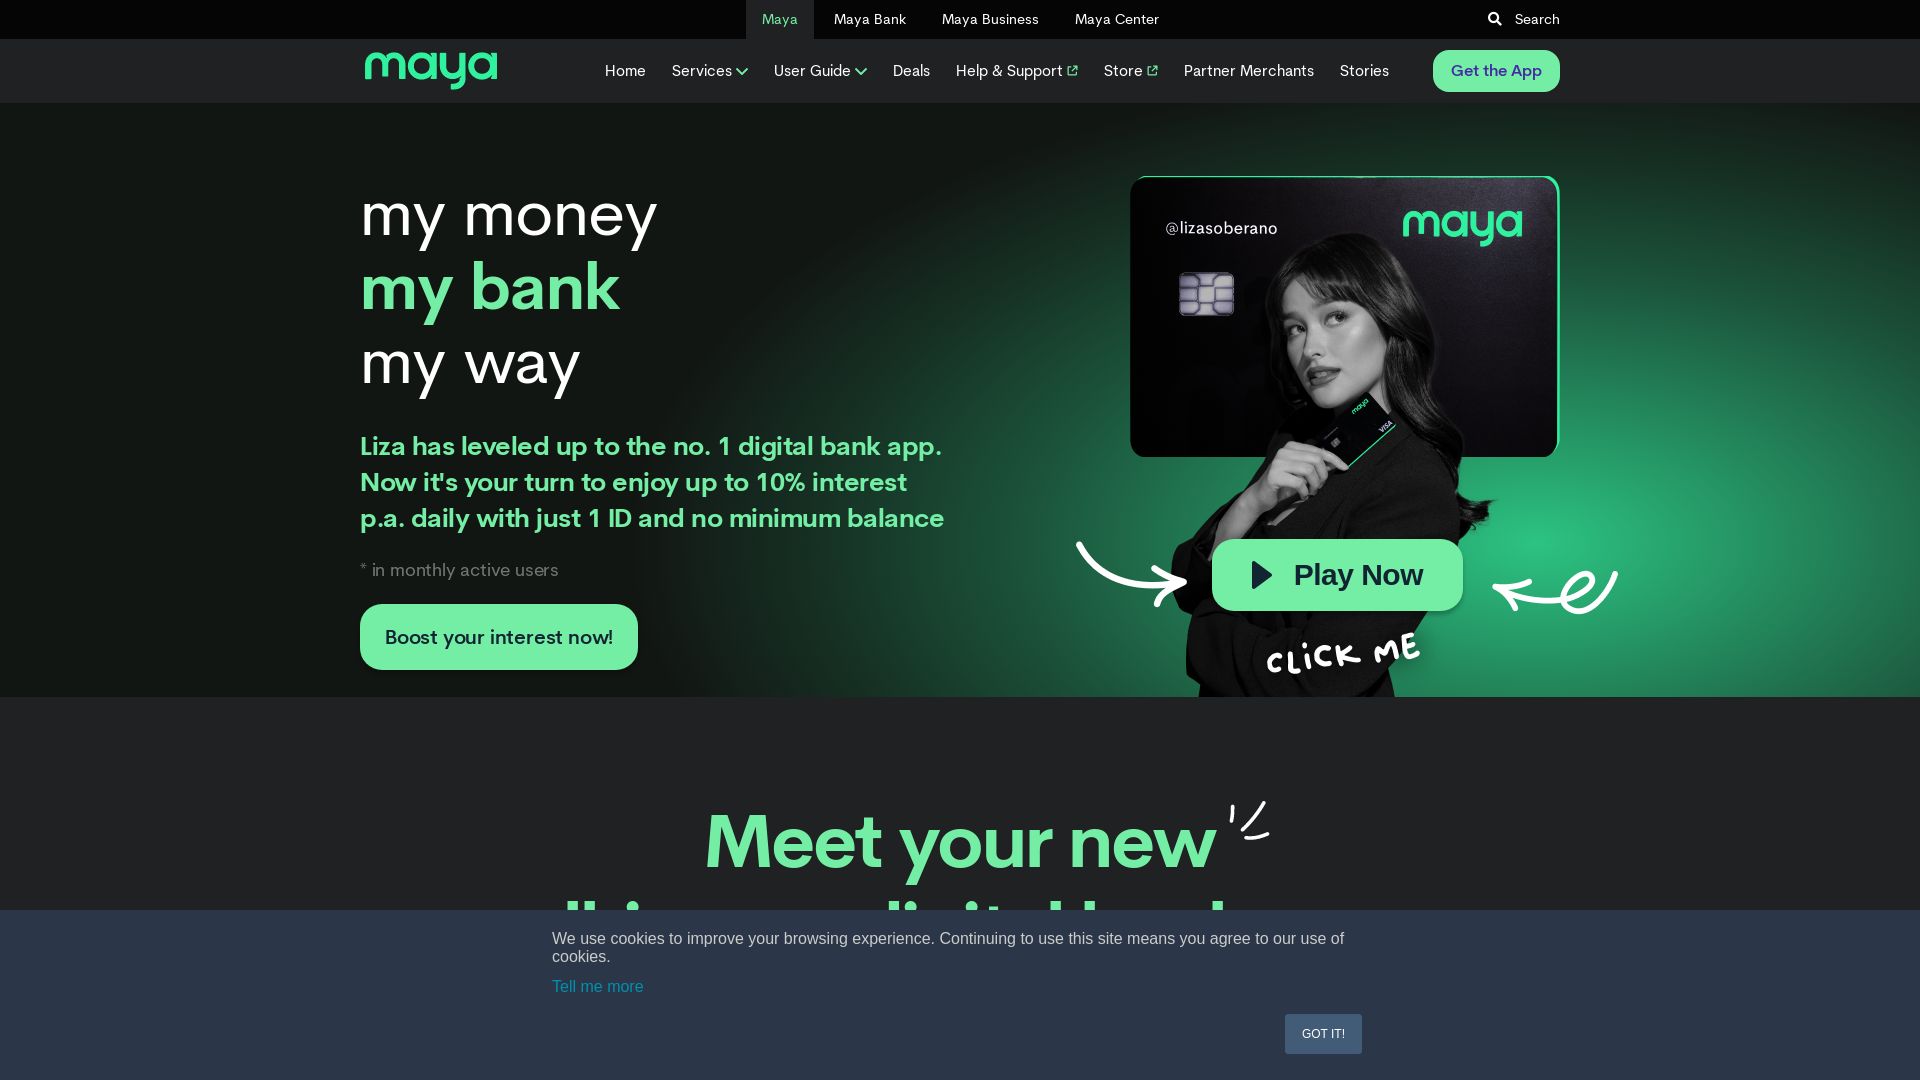 Website status paymaya.com is   ONLINE